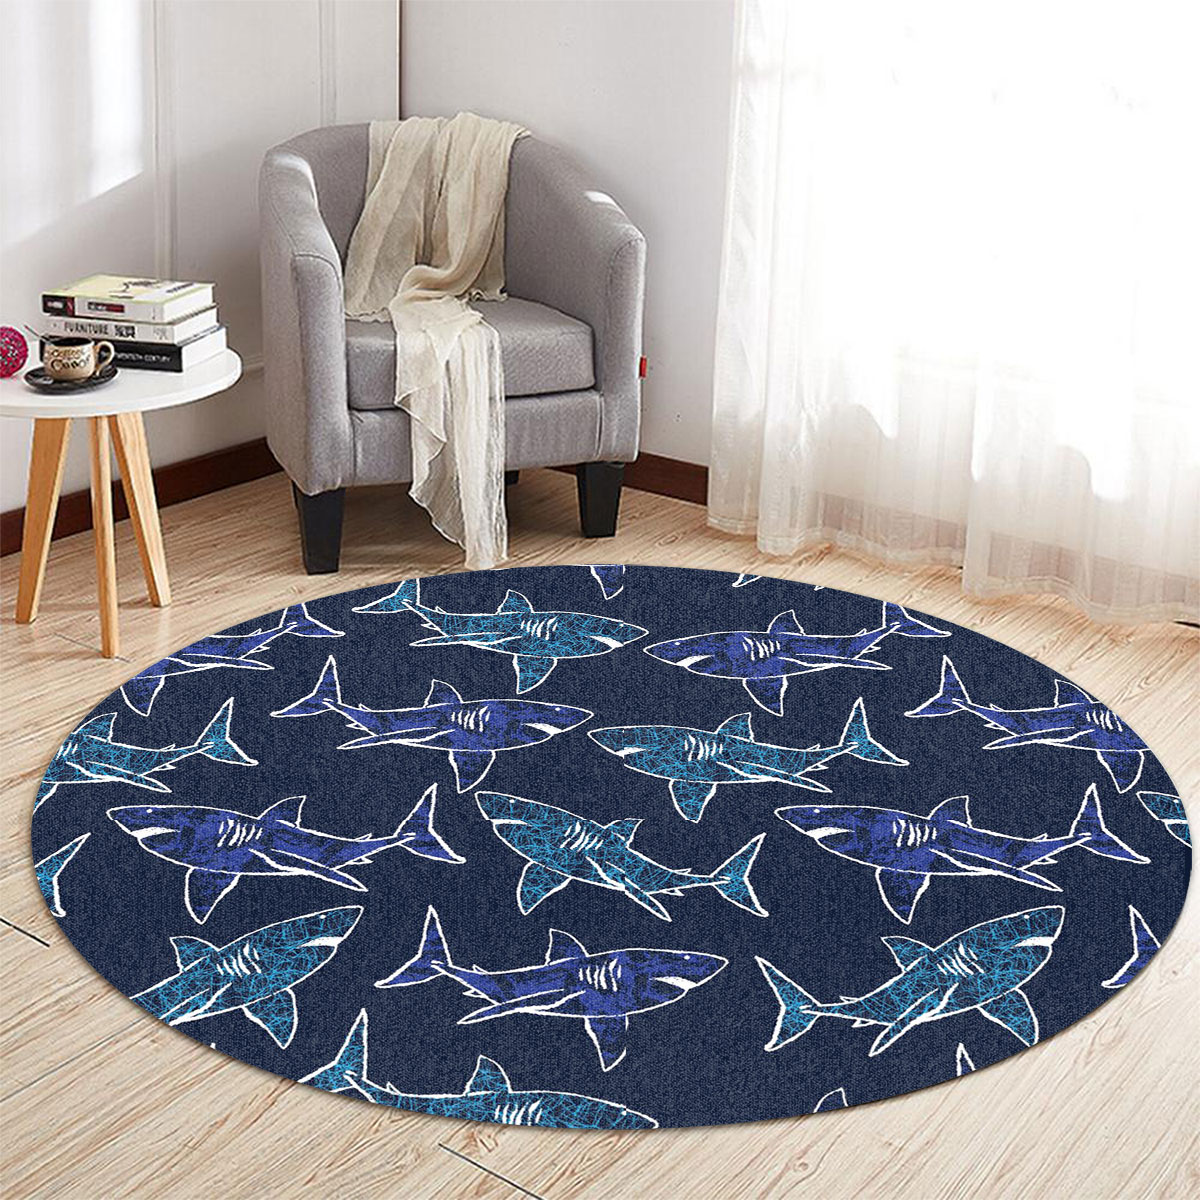 Dark Great White Shark Round Carpet